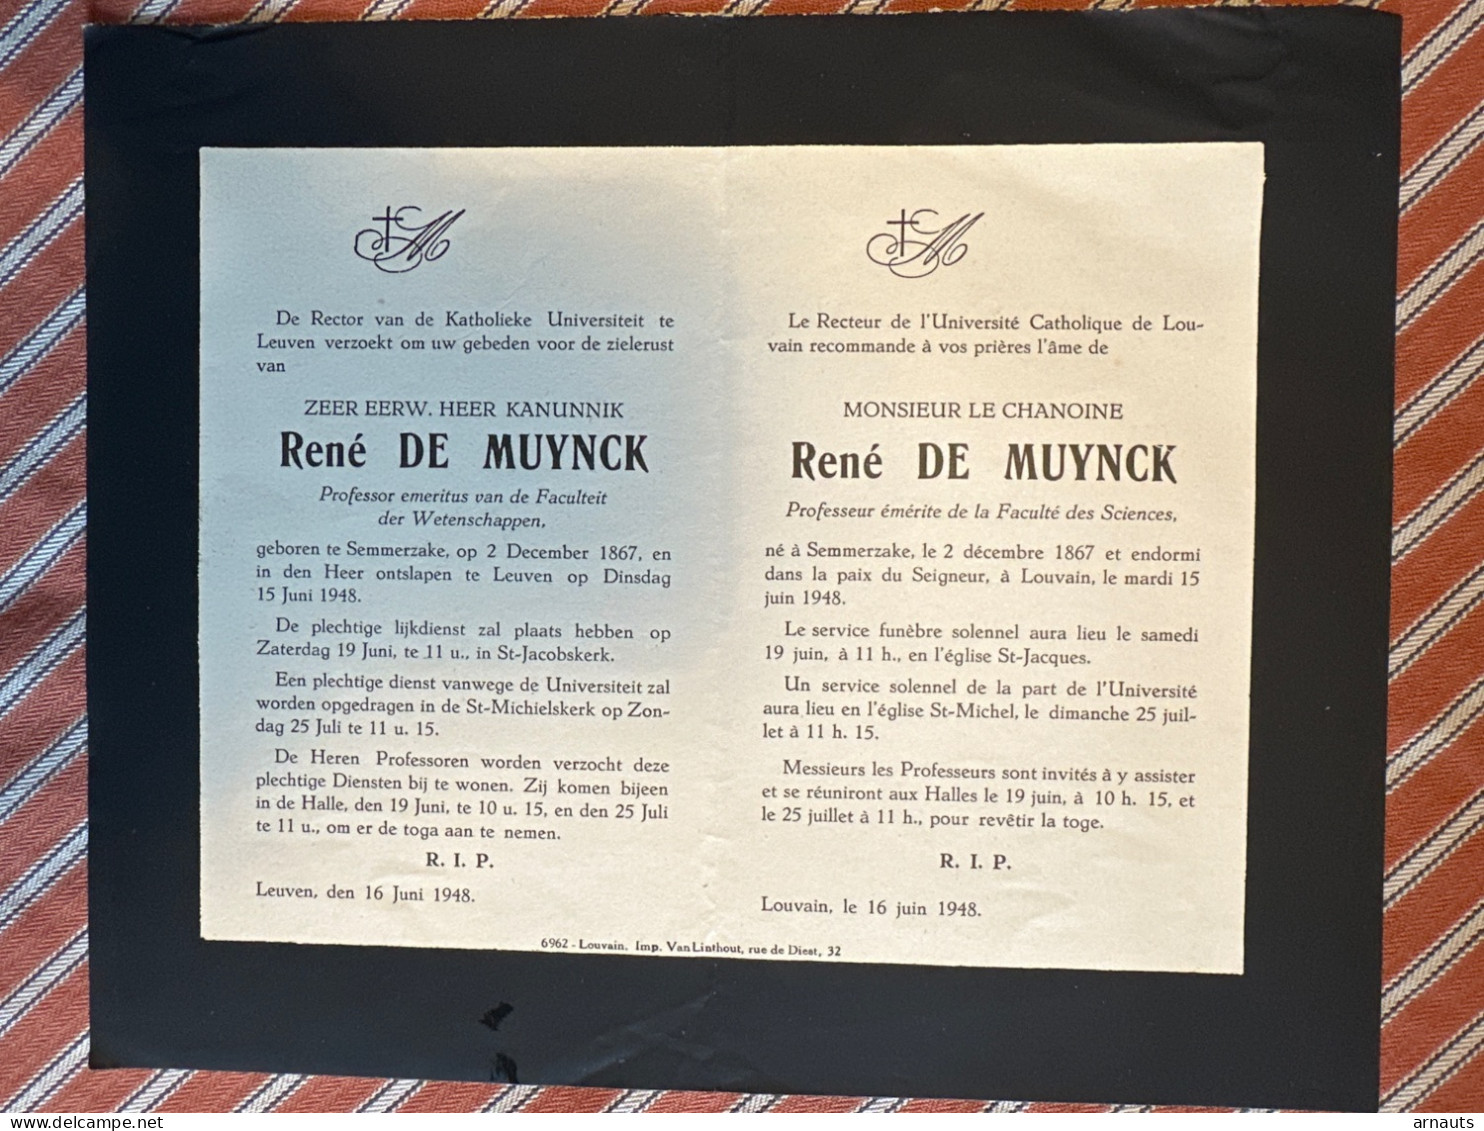 Rector Kath Univ Leuven Verzoekt Gebed Kanunnik Rene De Muynck Professor Faculteit Wetenschappen *1867 Semmerzake +1948 - Obituary Notices